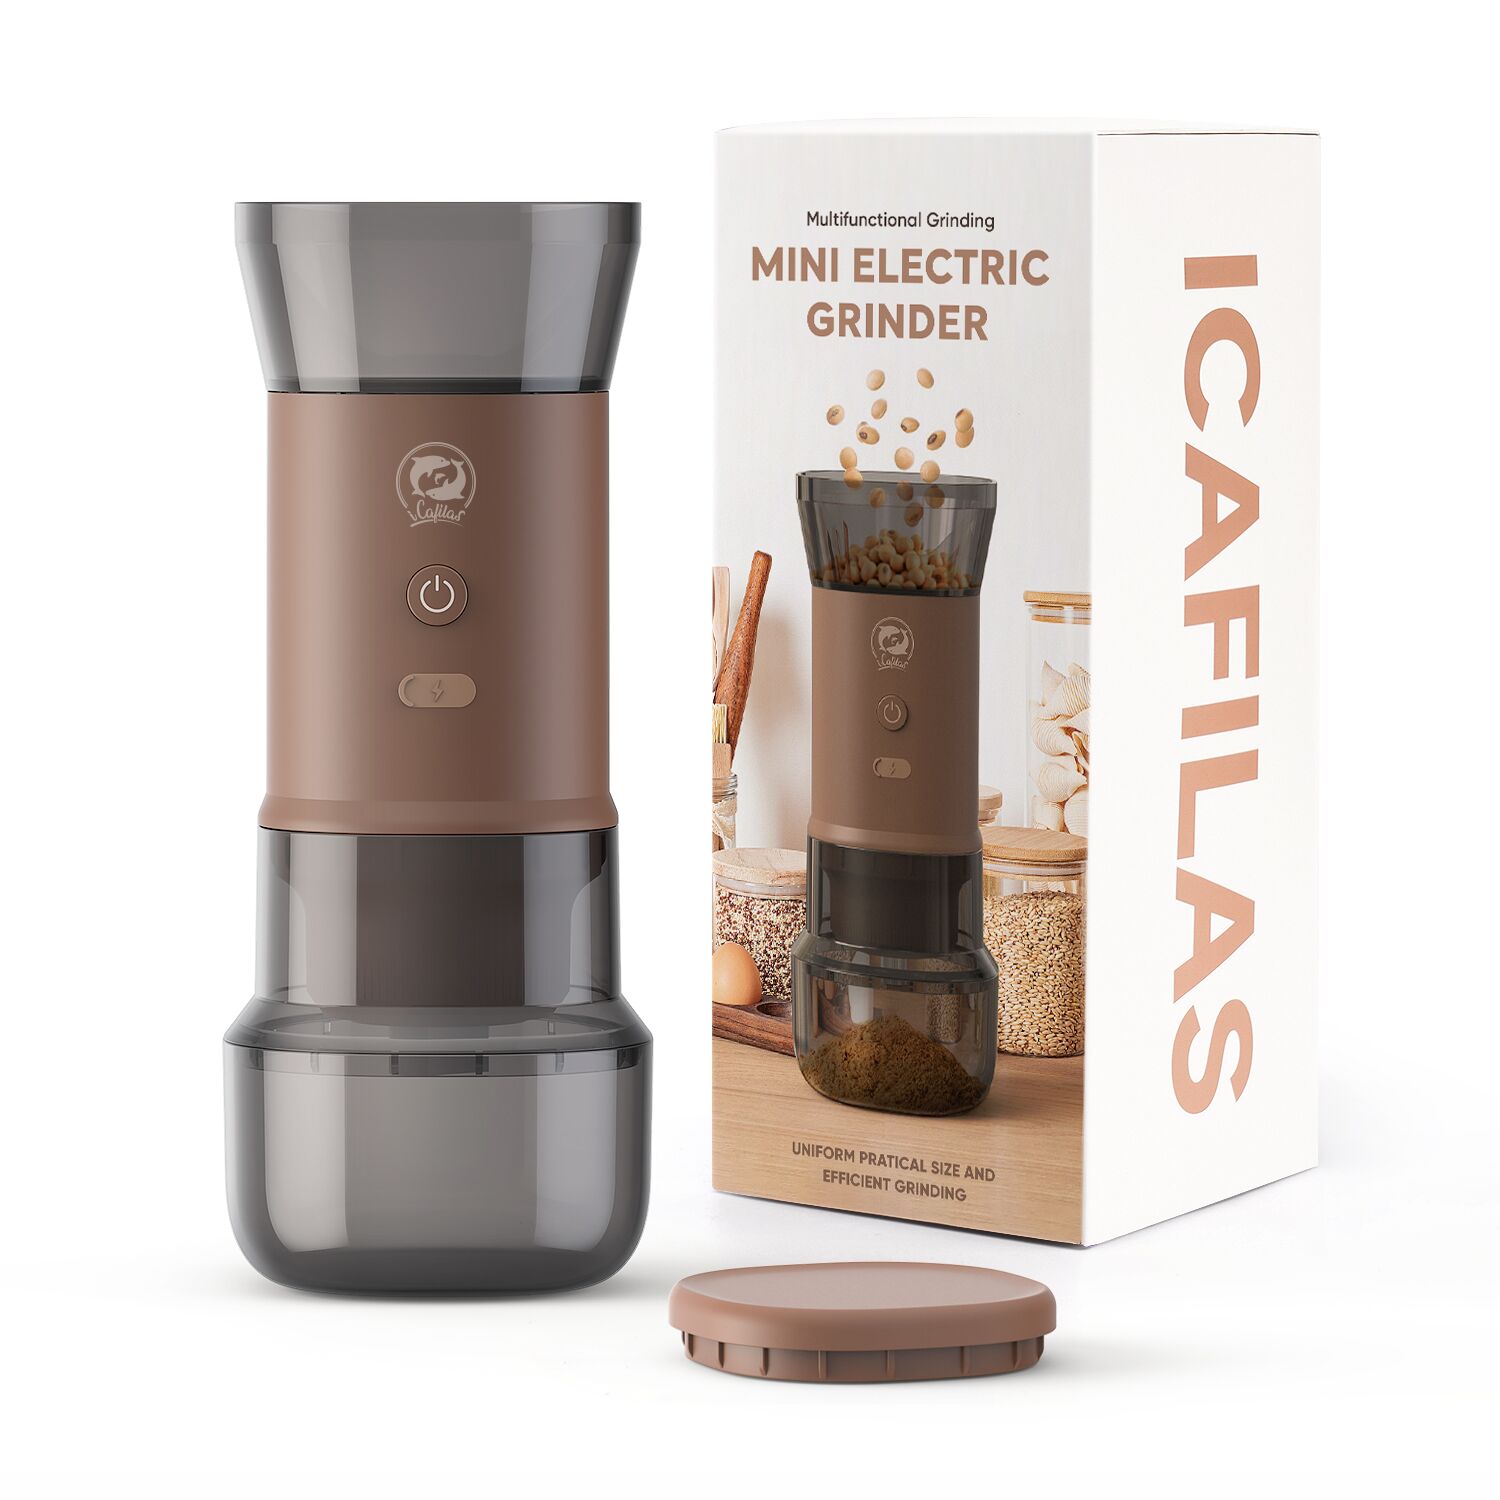 iCafilas Portable Coffee Machine Expresso Coffee Maker Fit Nexpresso Dolce  Pod Capsule Coffee Powder for Car & Home USB DC12V